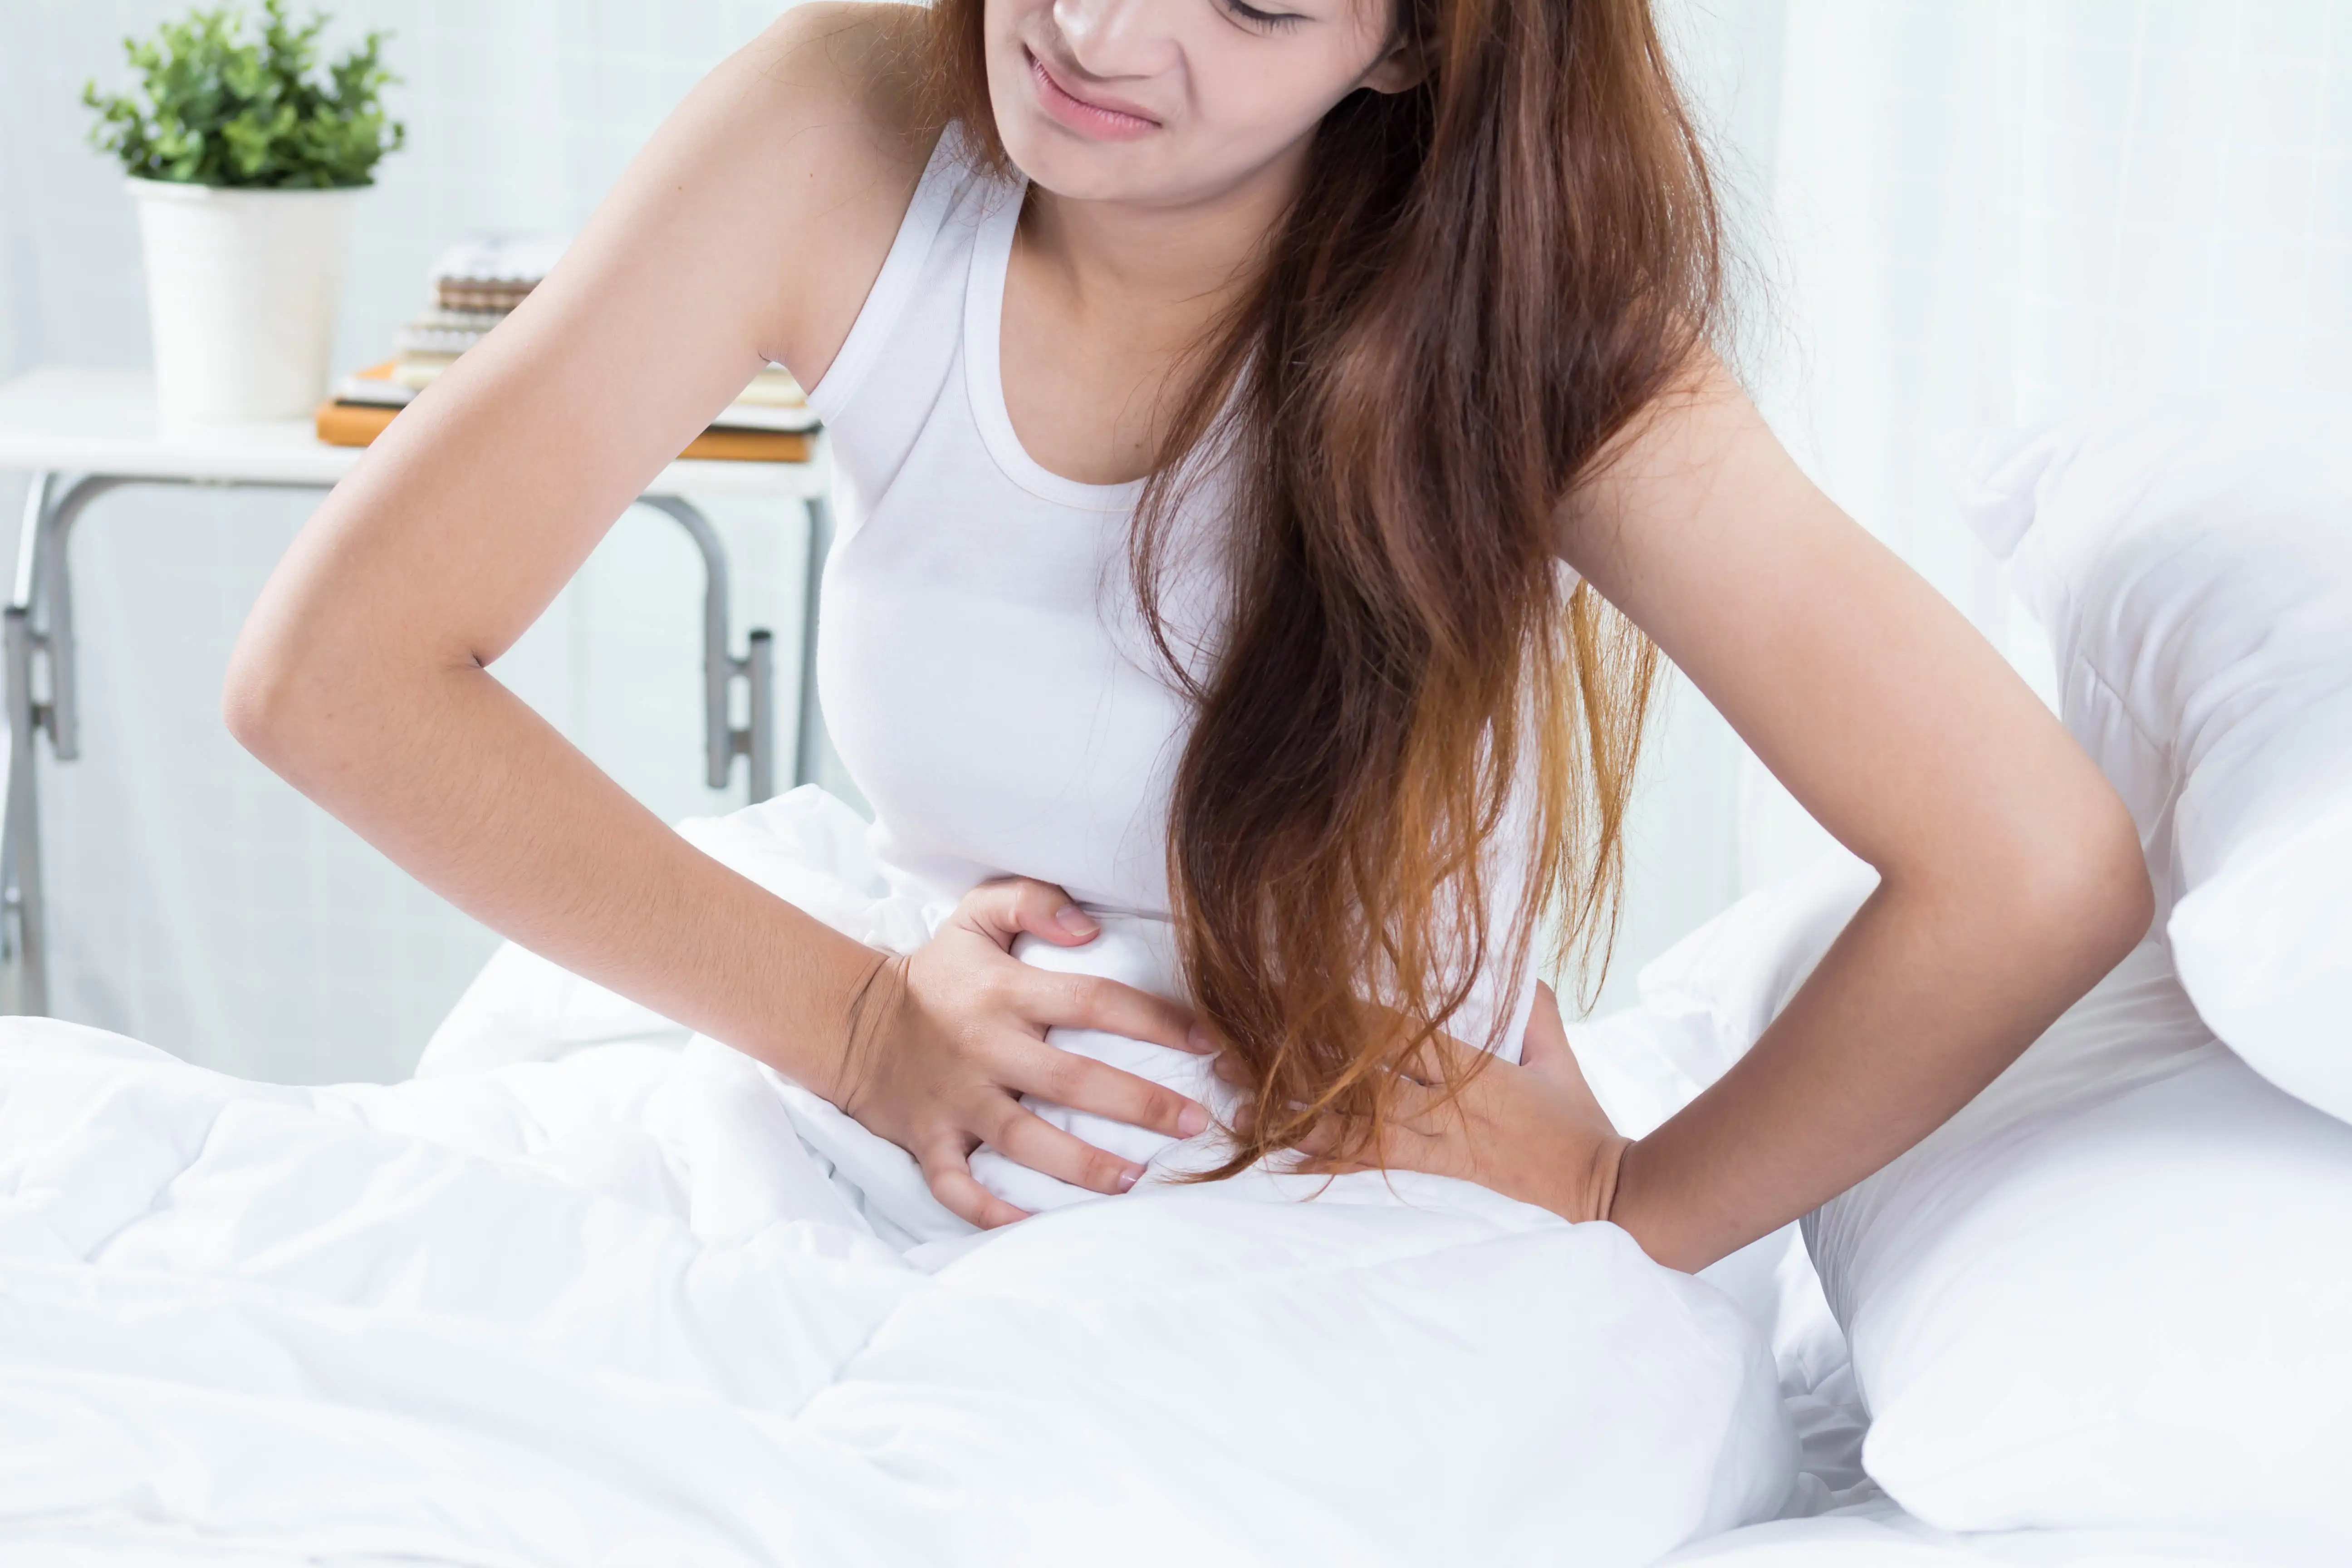 Endometriosis and pelvic pain